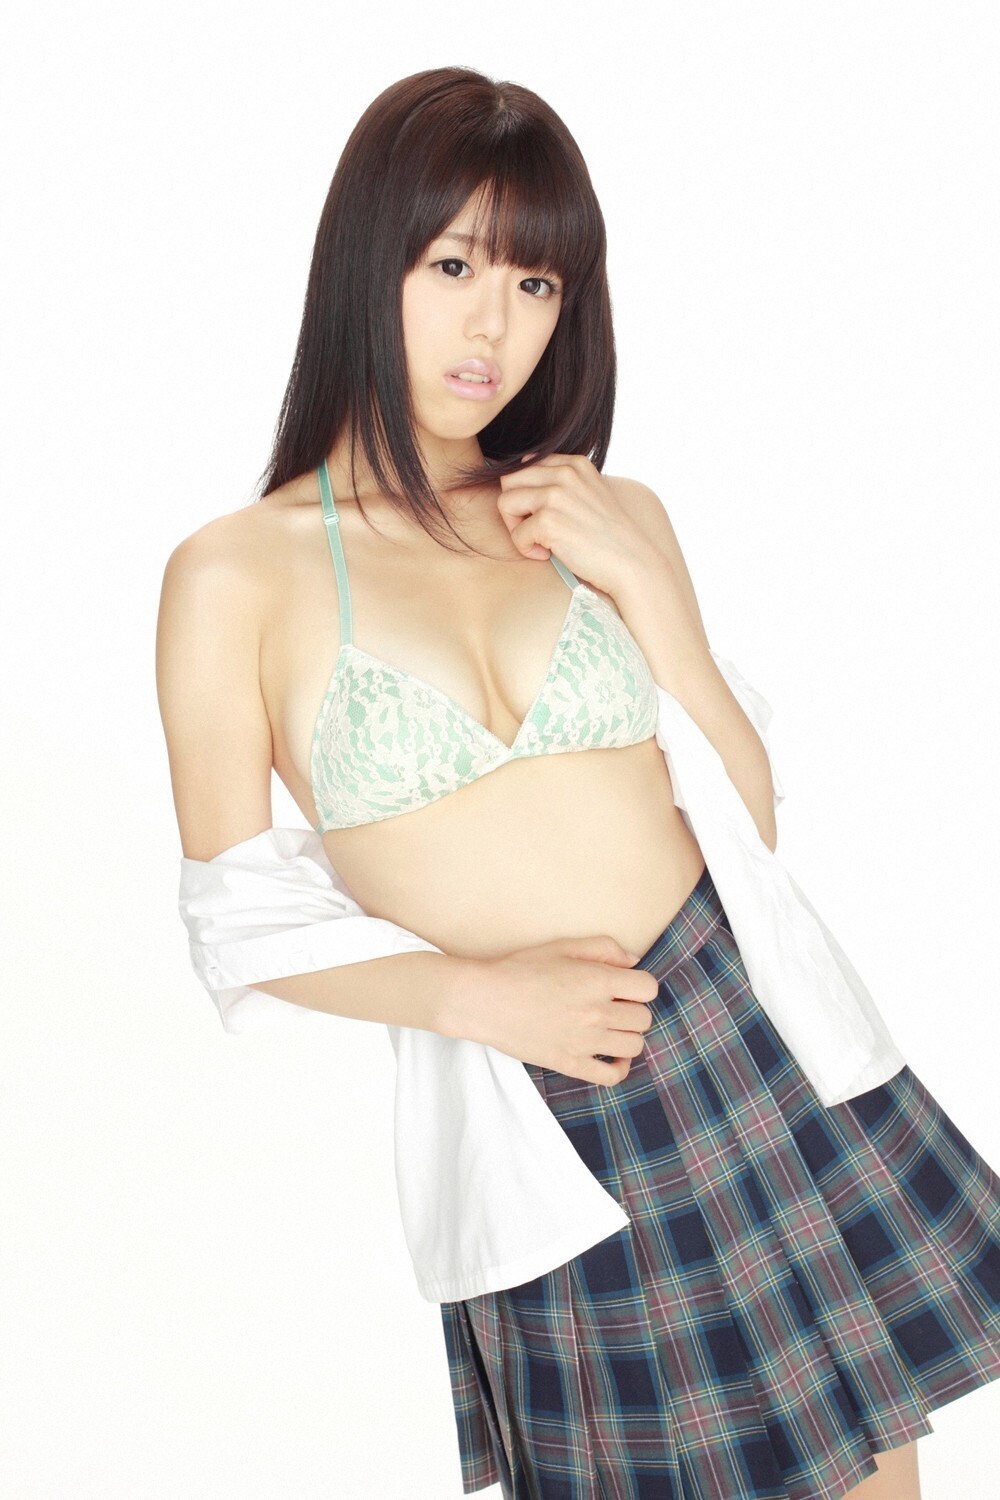 [ys-web] vol.530 sexy pictures of nozomi fuzuki, a Japanese actress